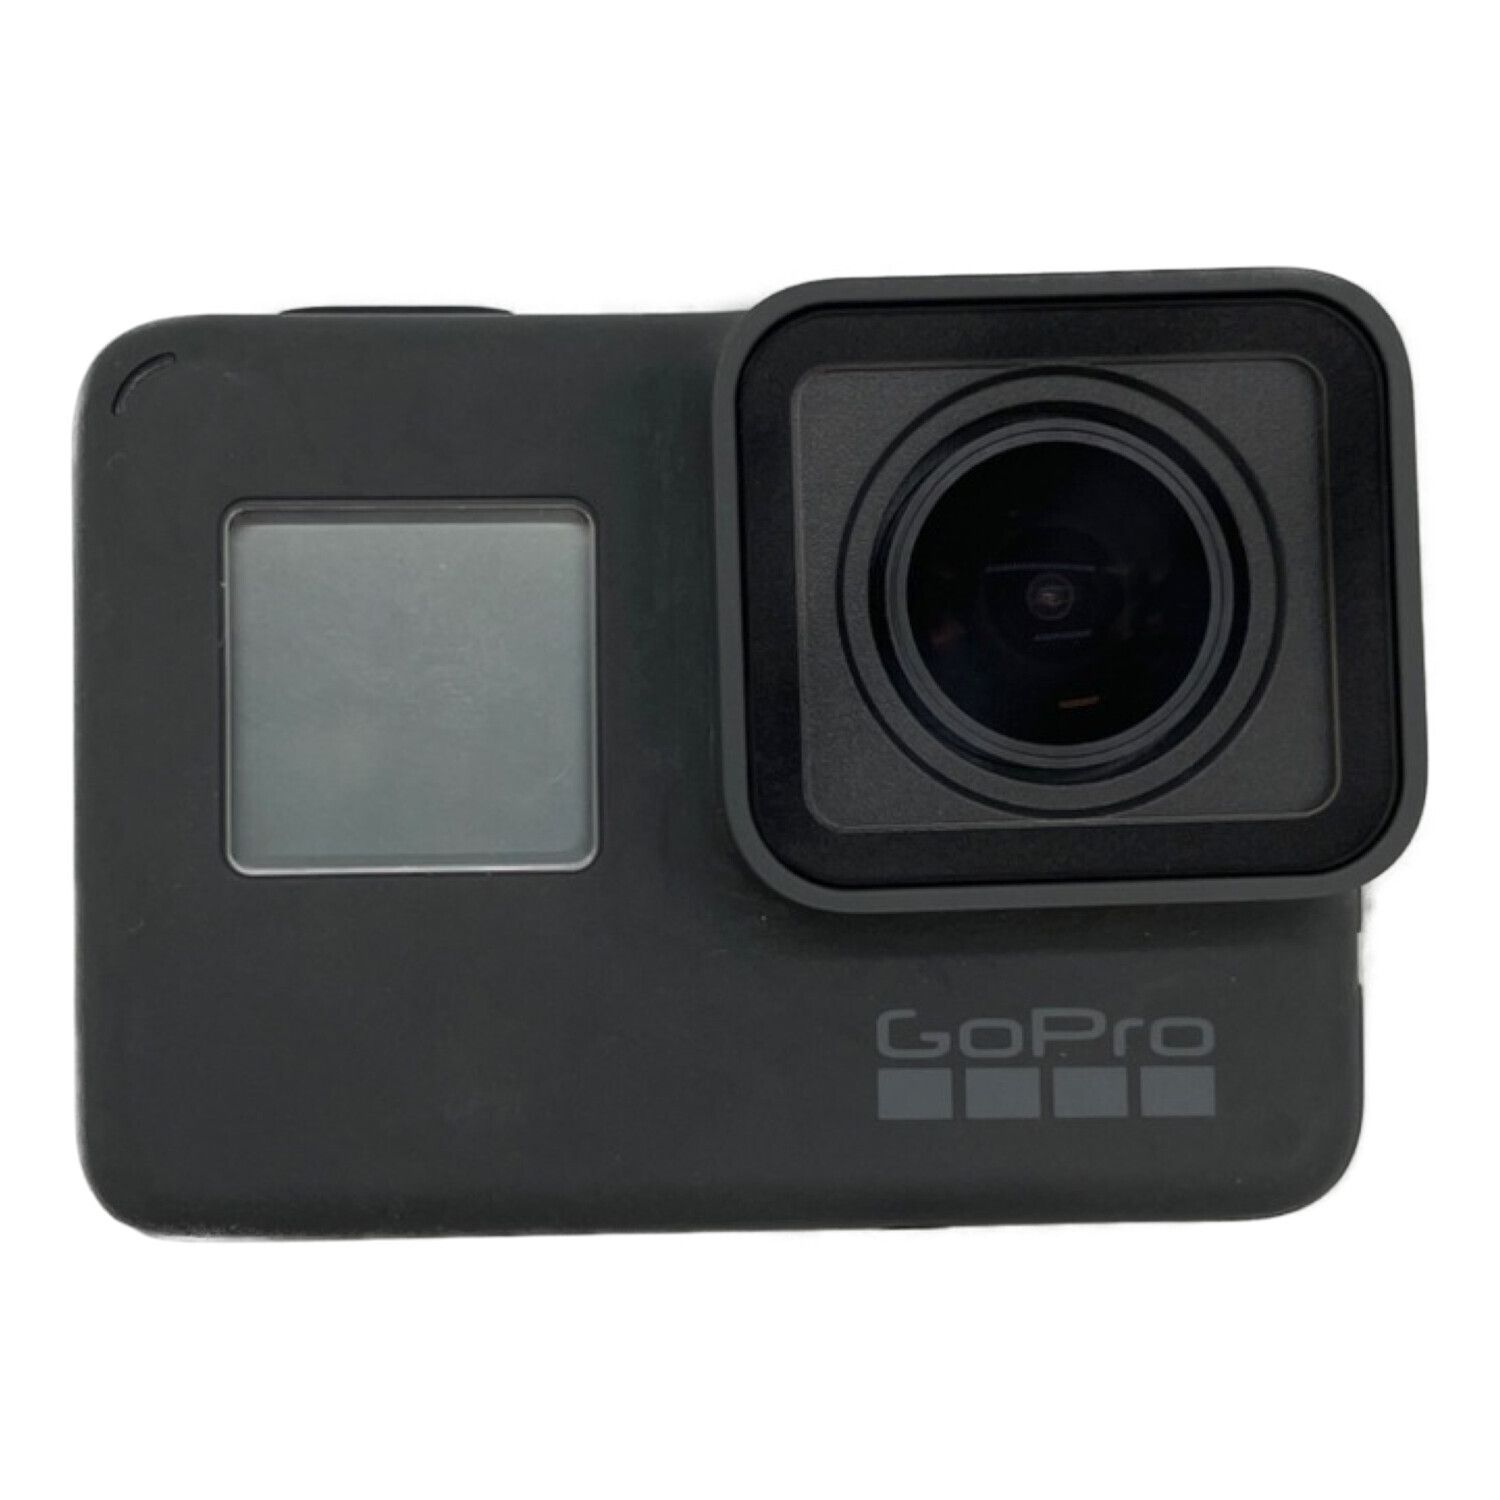 GoPro (ゴープロ) アクションカメラ アクセサリーセット HERO5